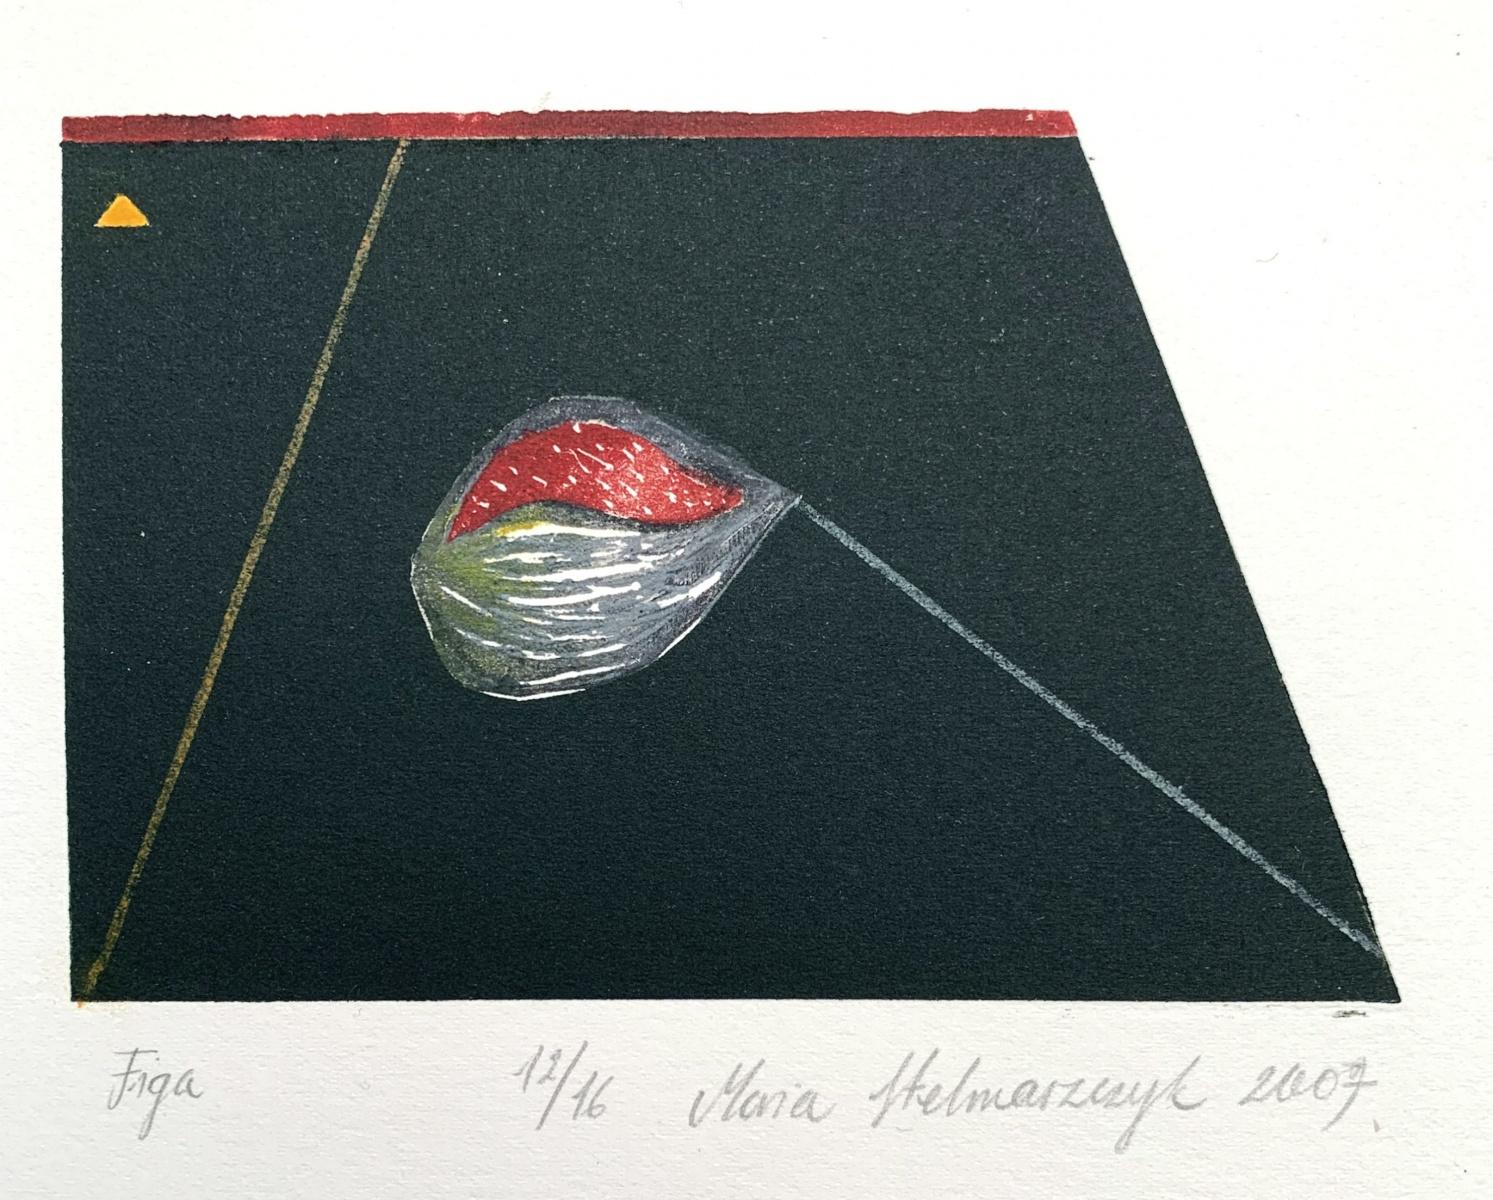 Maria Stelmaszczyk Abstract Print - A fig - Contemporary Linocut Woodcut Print, Geometric